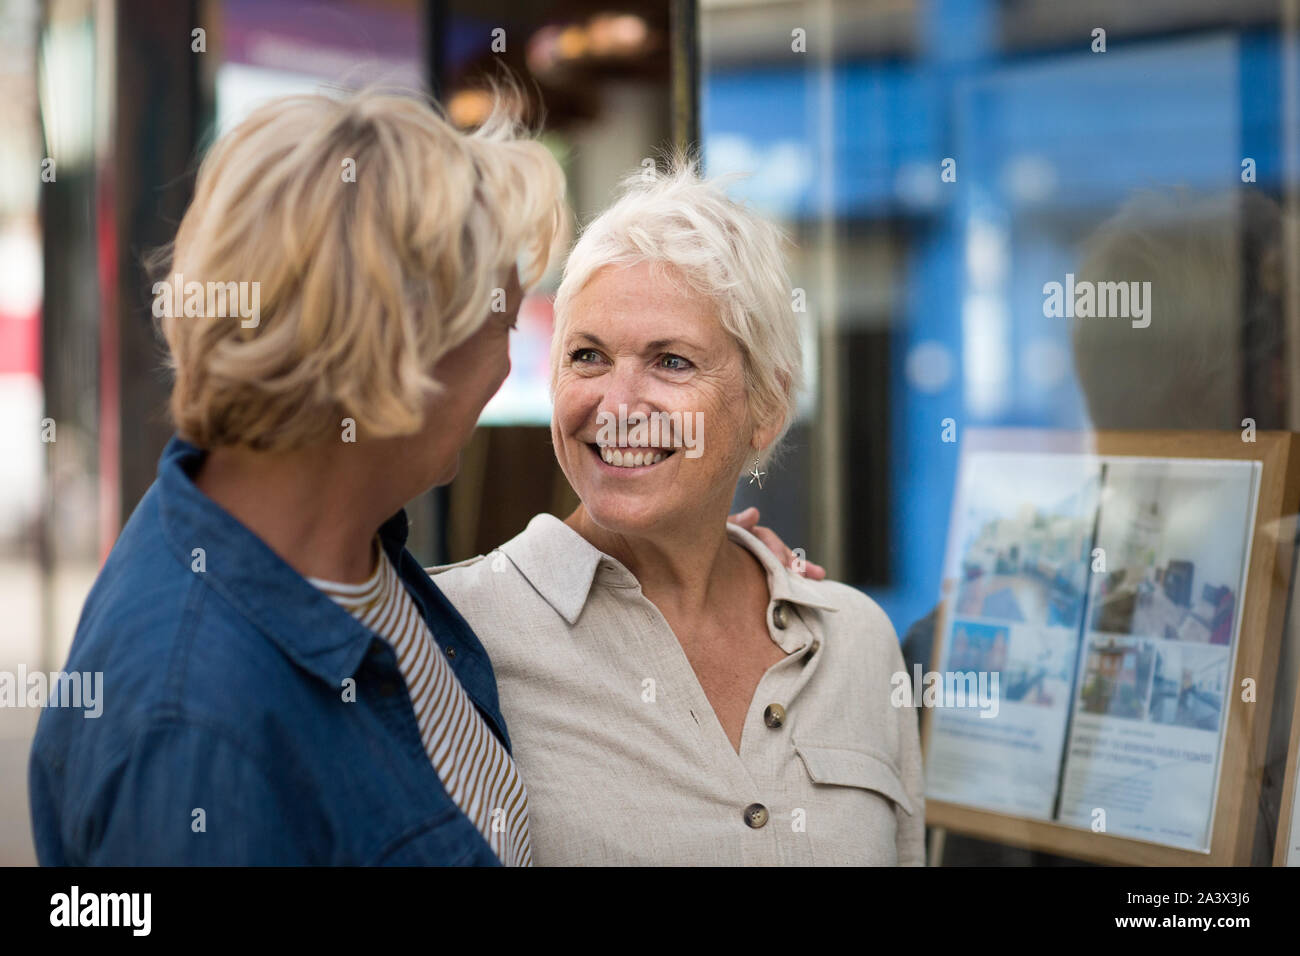 Lesbiana maduras pareja mirando agencia inmobiliaria de la ventana Foto de stock